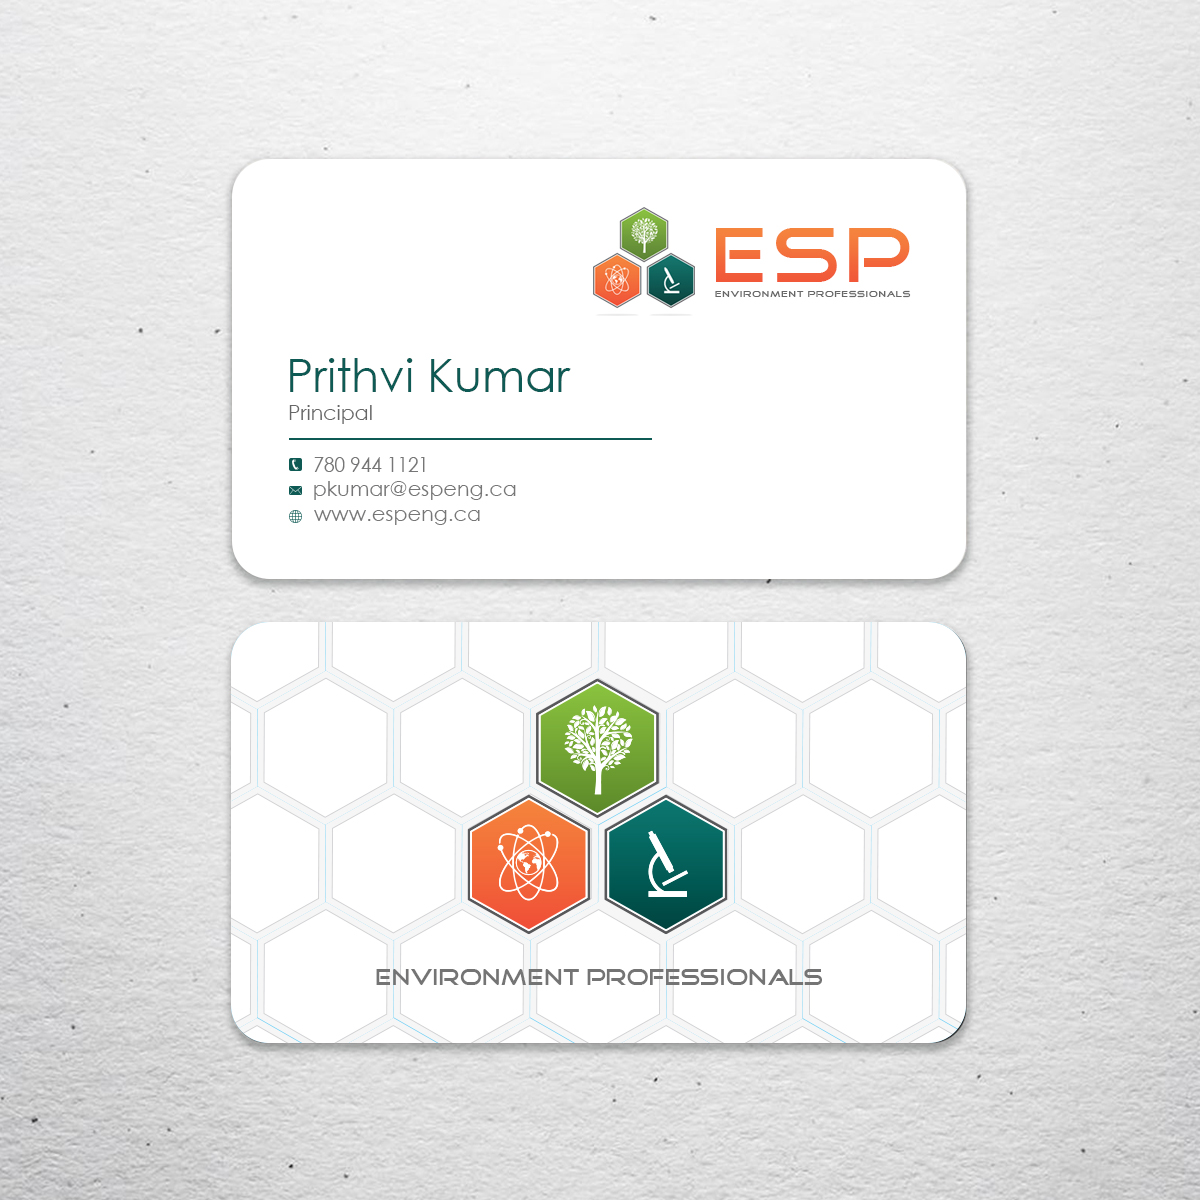 Business Card & Stationery Design entry 1686606 submitted by Sonia99 to the Business Card & Stationery Design for ESP run by pkumar@espeng.ca